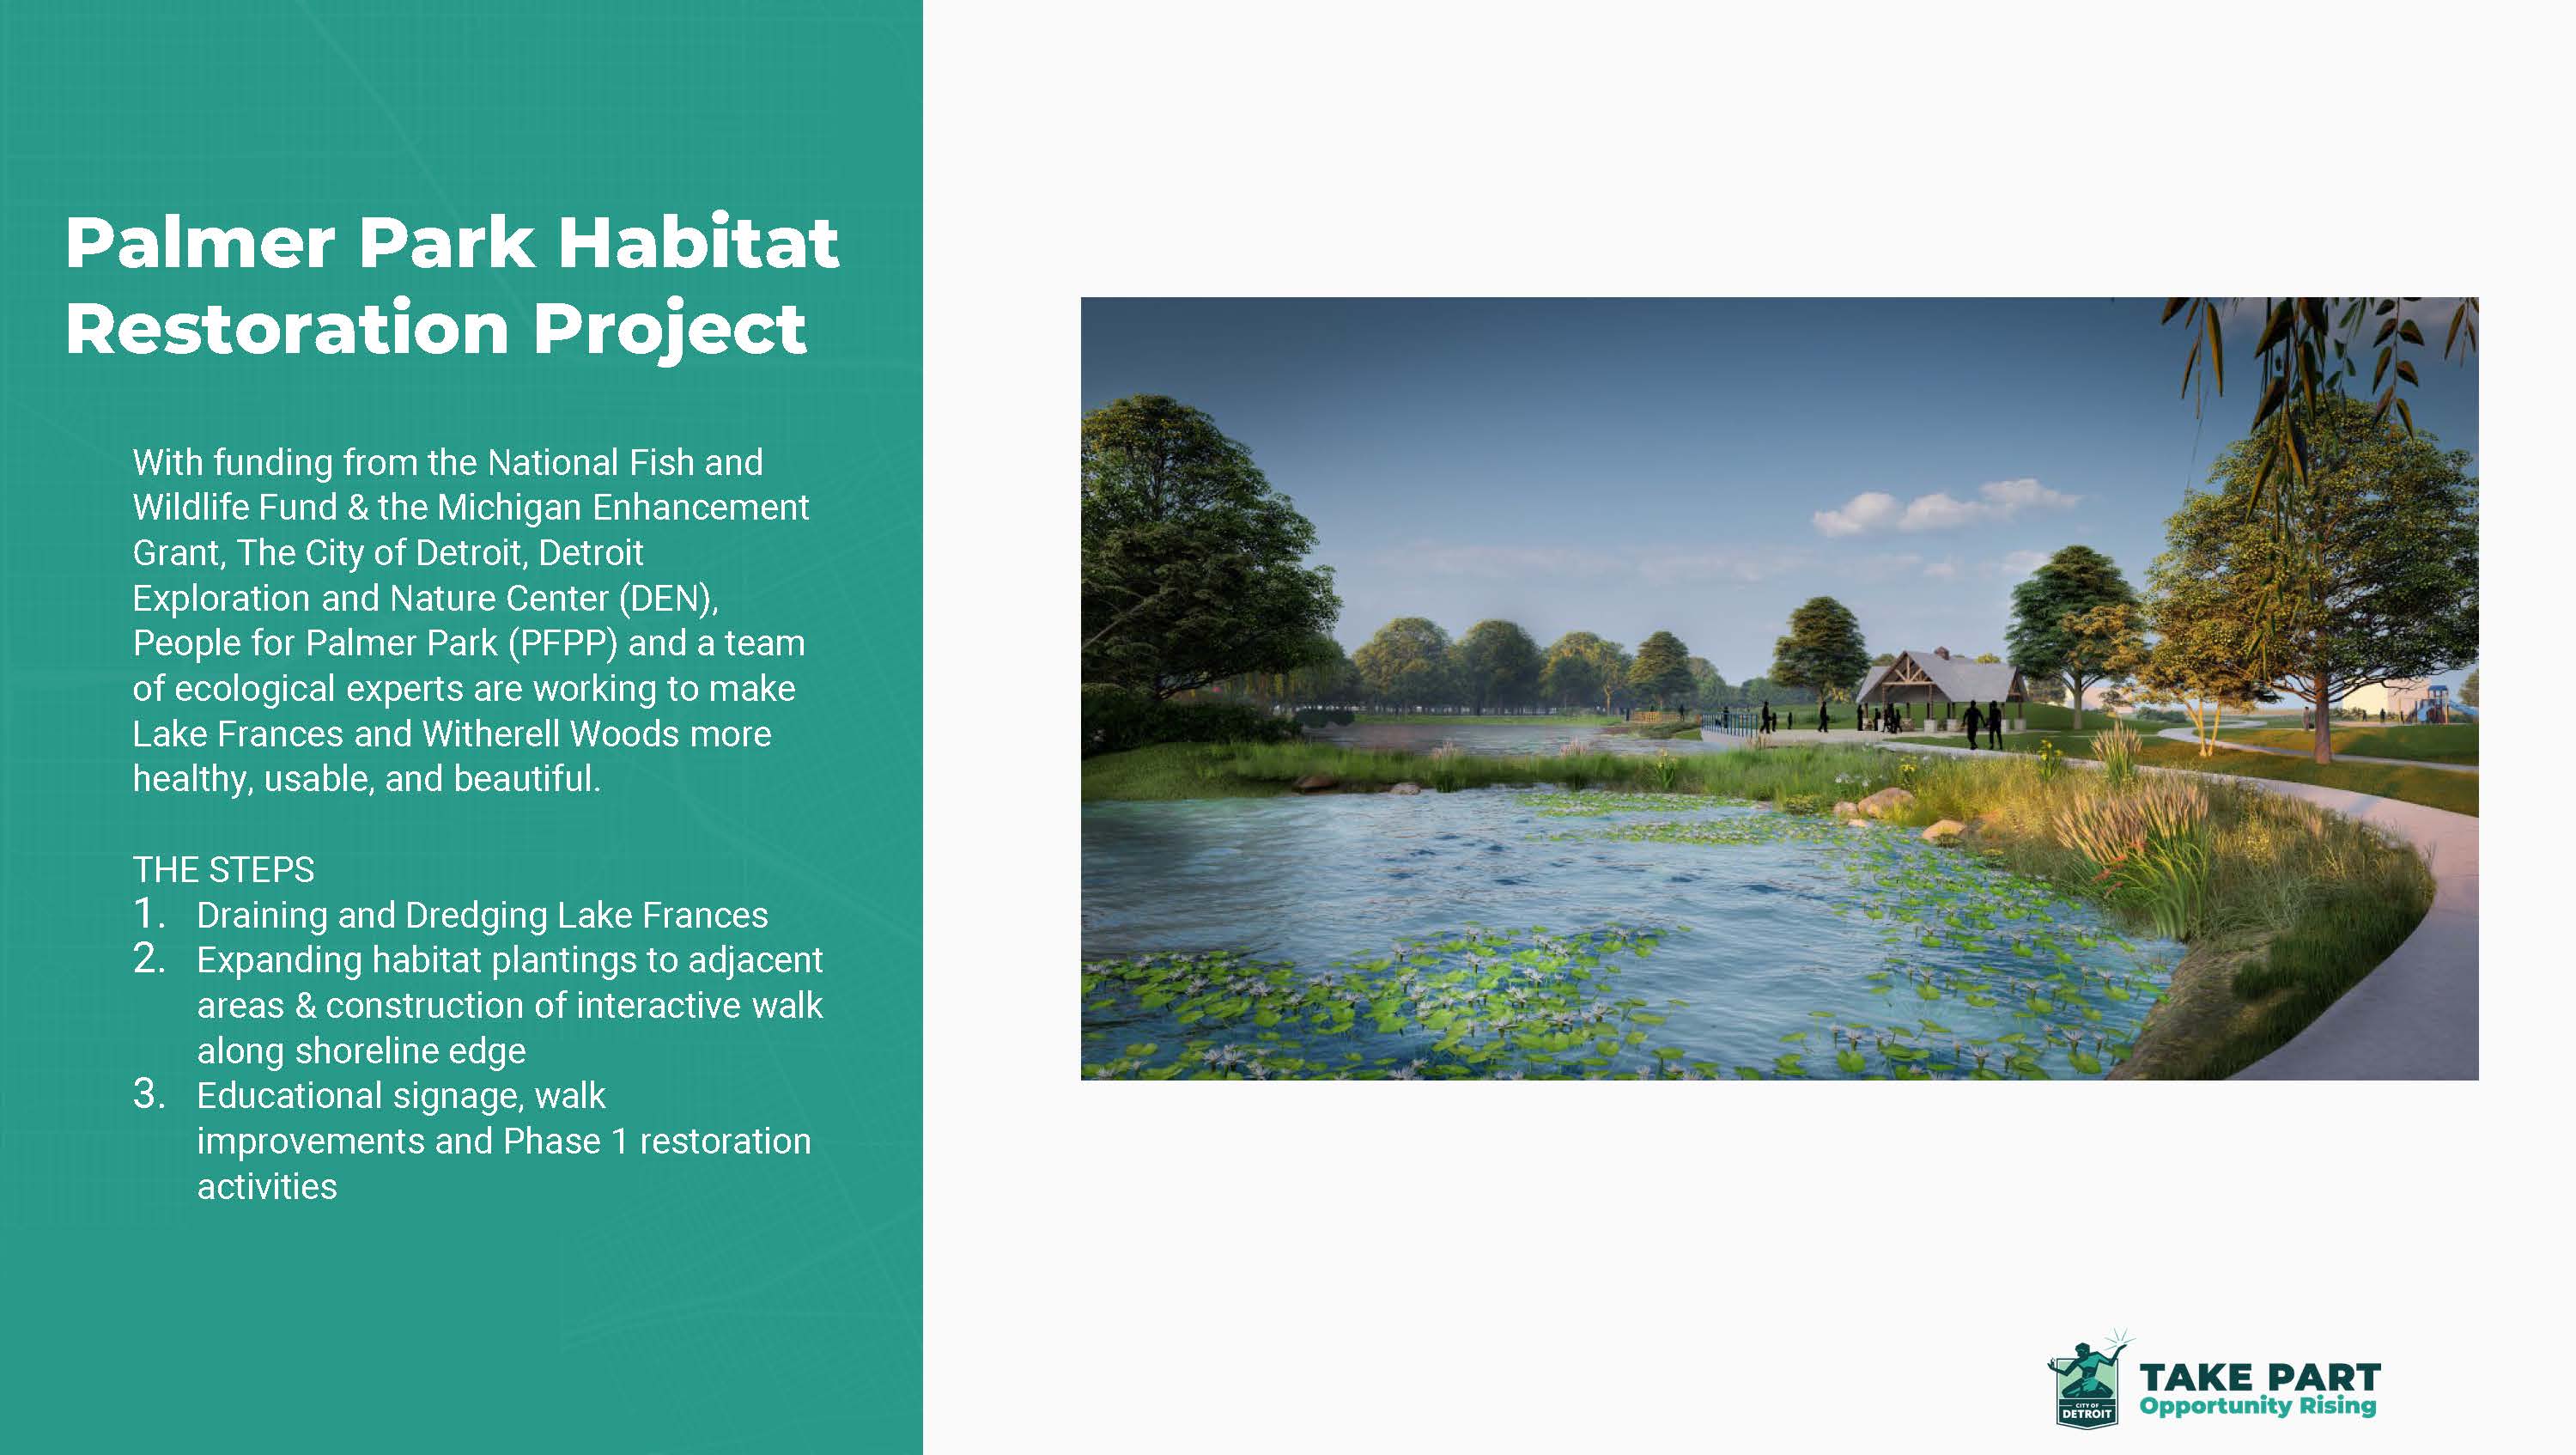 Palmer Park Habitat Restoration Project Summary